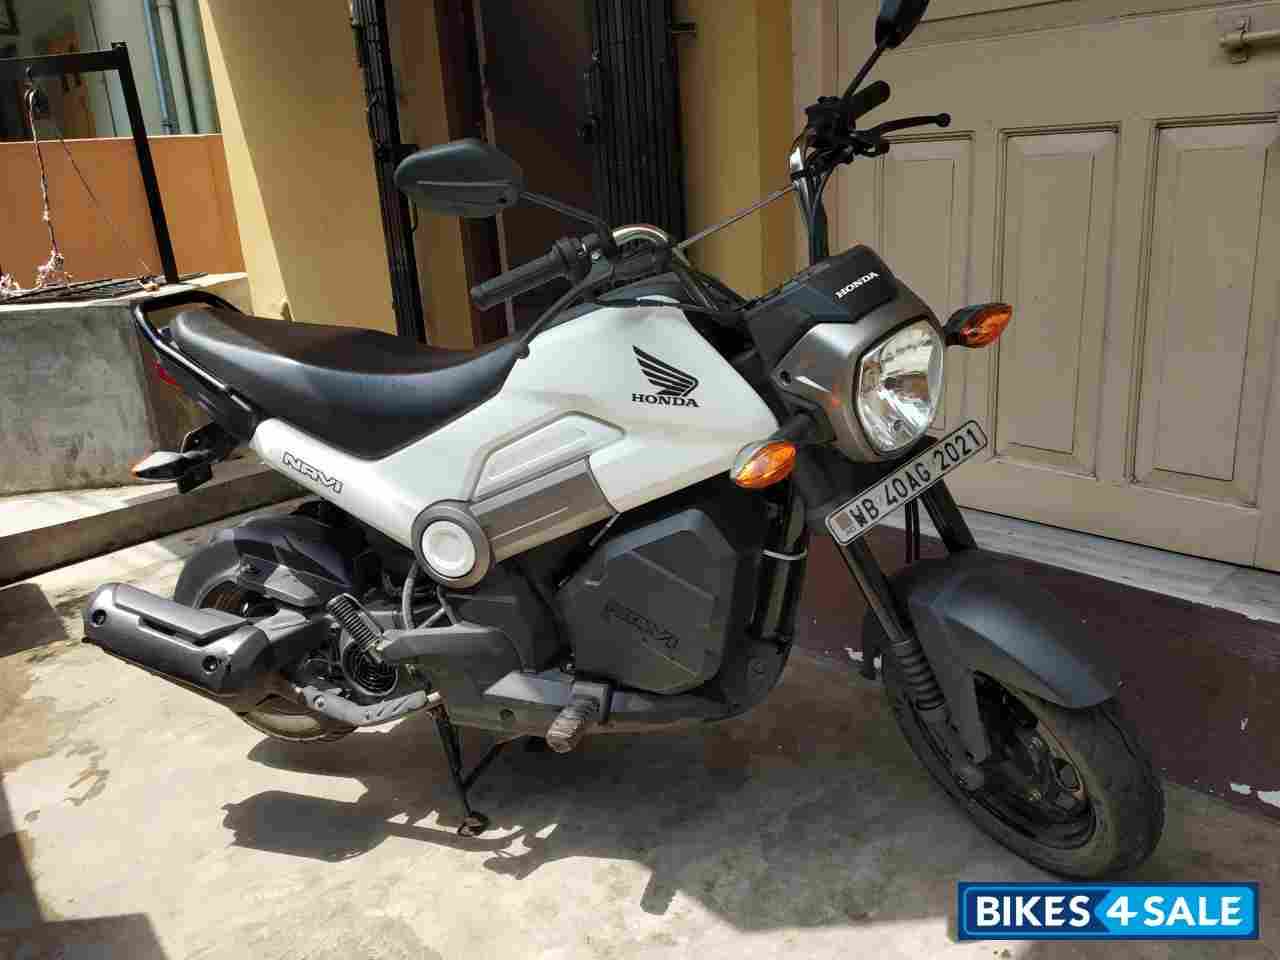 Used 2017 model Honda Navi for sale in Bardhaman. ID 221872 - Bikes4Sale